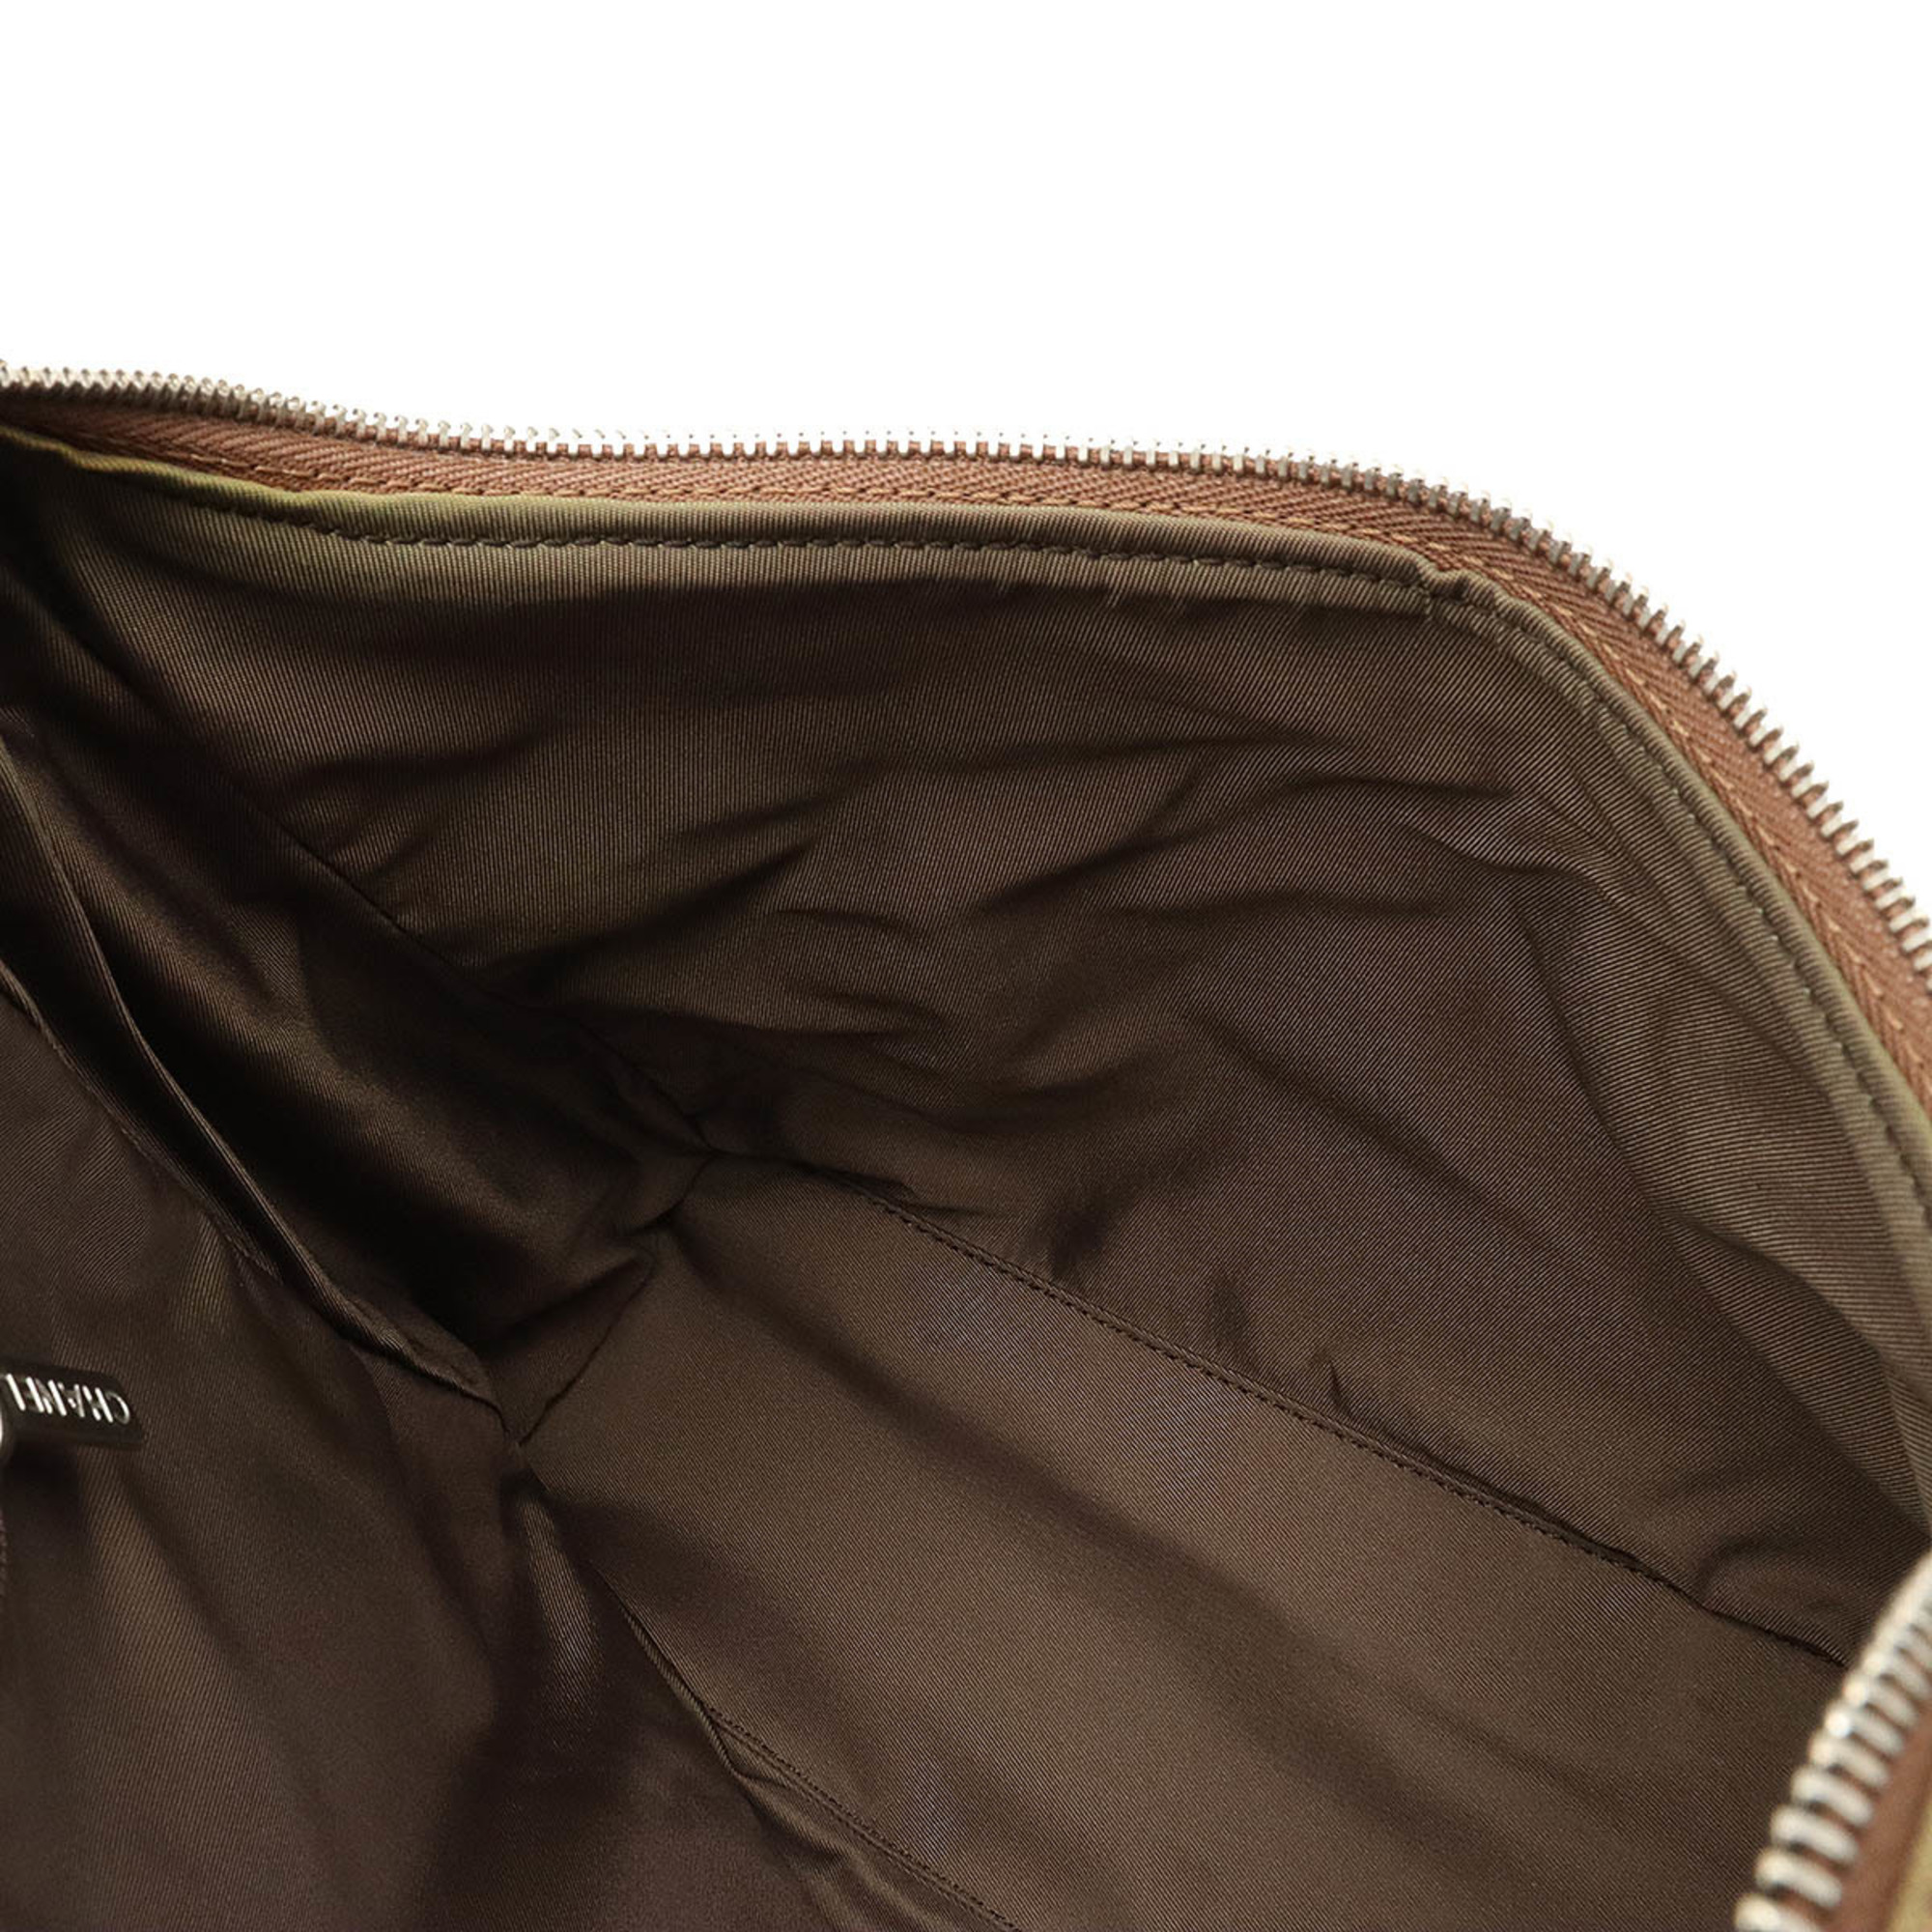 CHANEL New Line Rucksack Shoulder Bag Nylon Jacquard Leather Khaki A15958